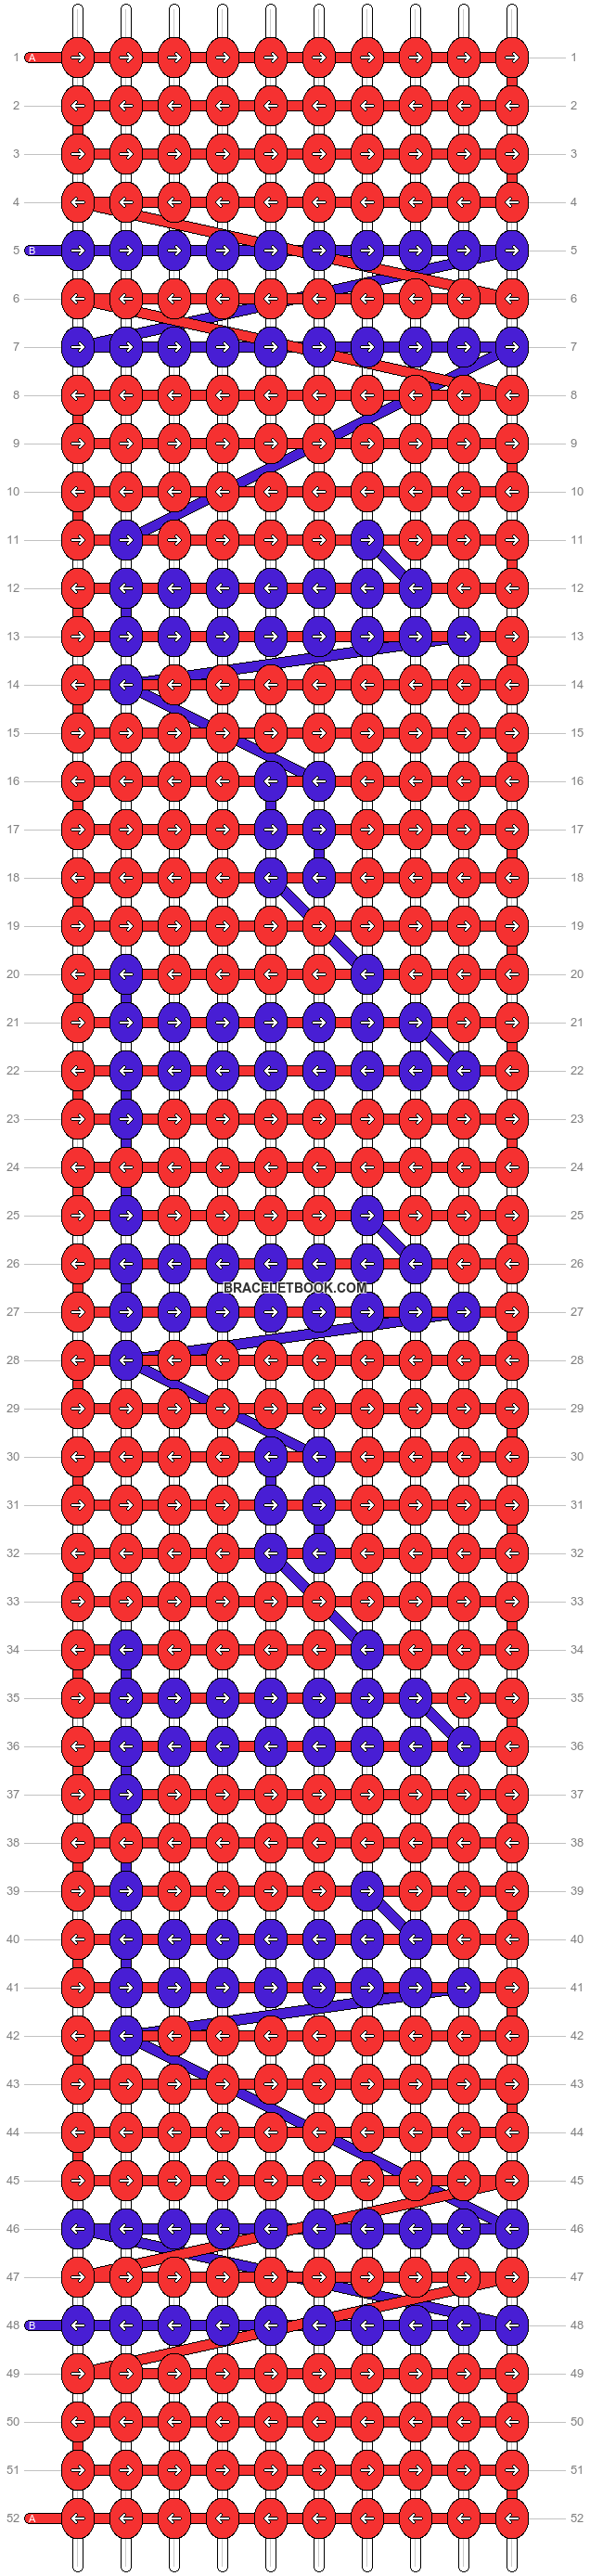 Alpha pattern #1885 variation #18566 pattern